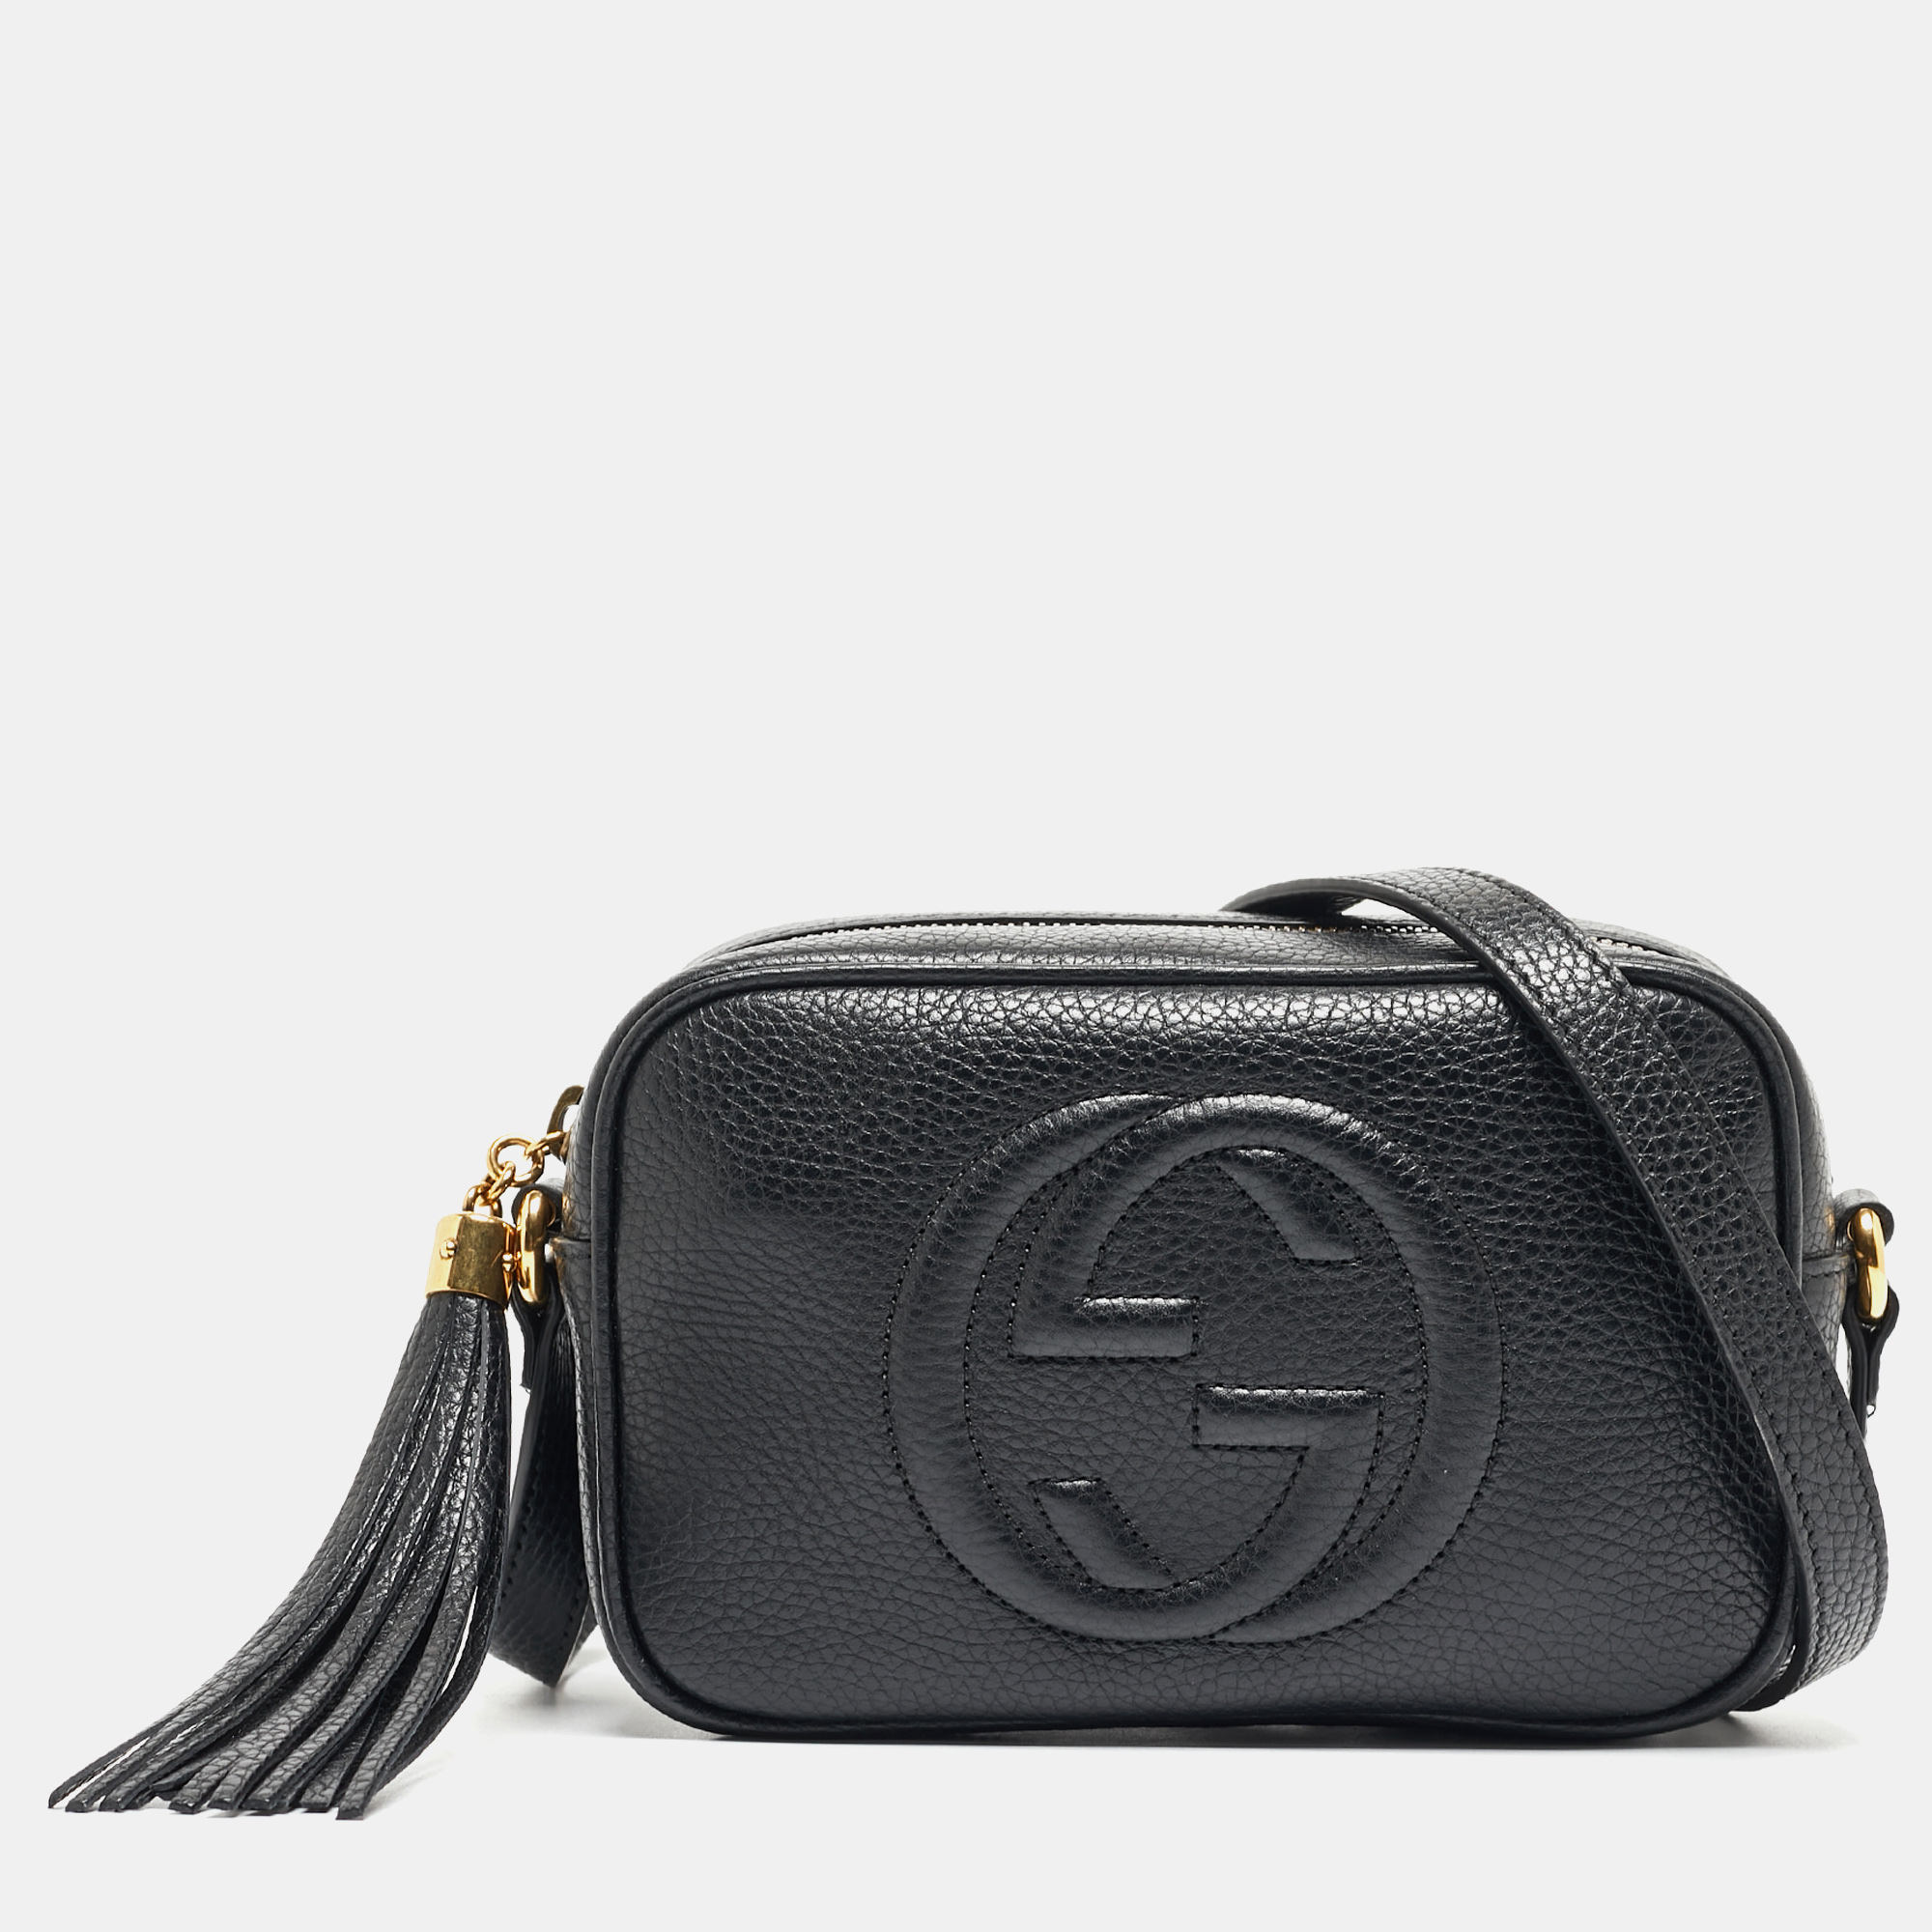 Gucci black leather mini soho disco shoulder bag